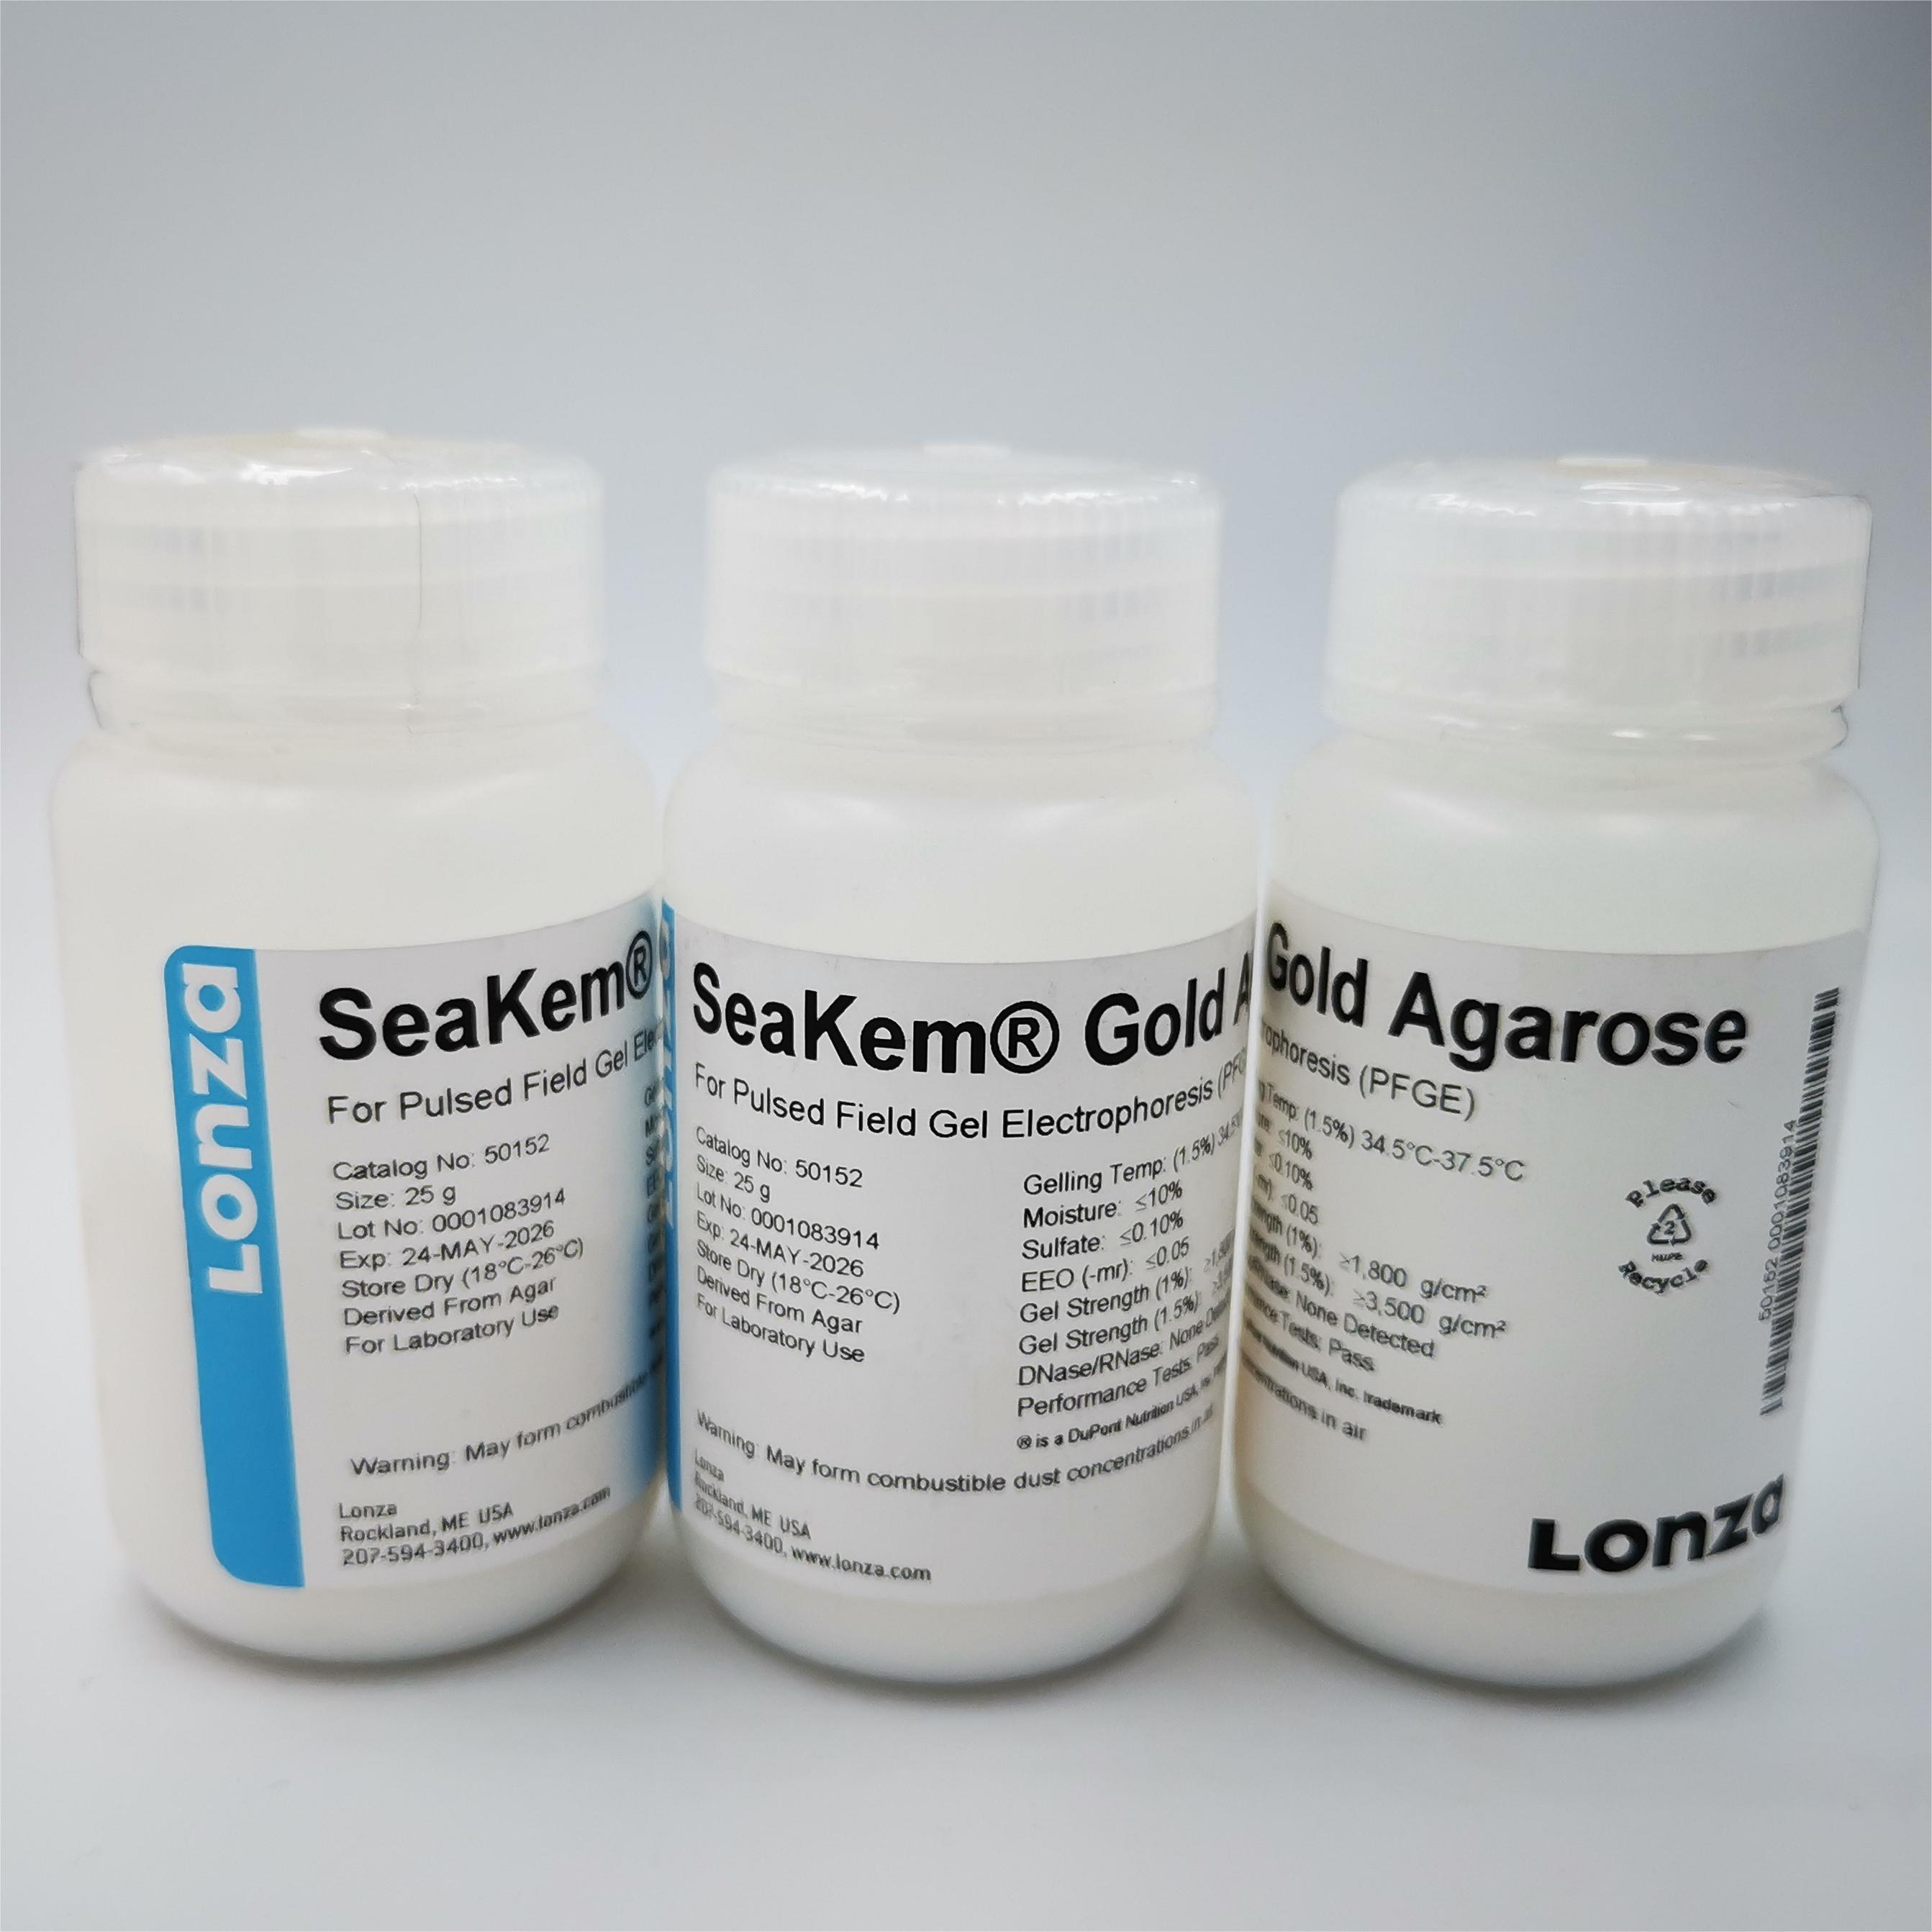 SeaKem® Gold Agarose